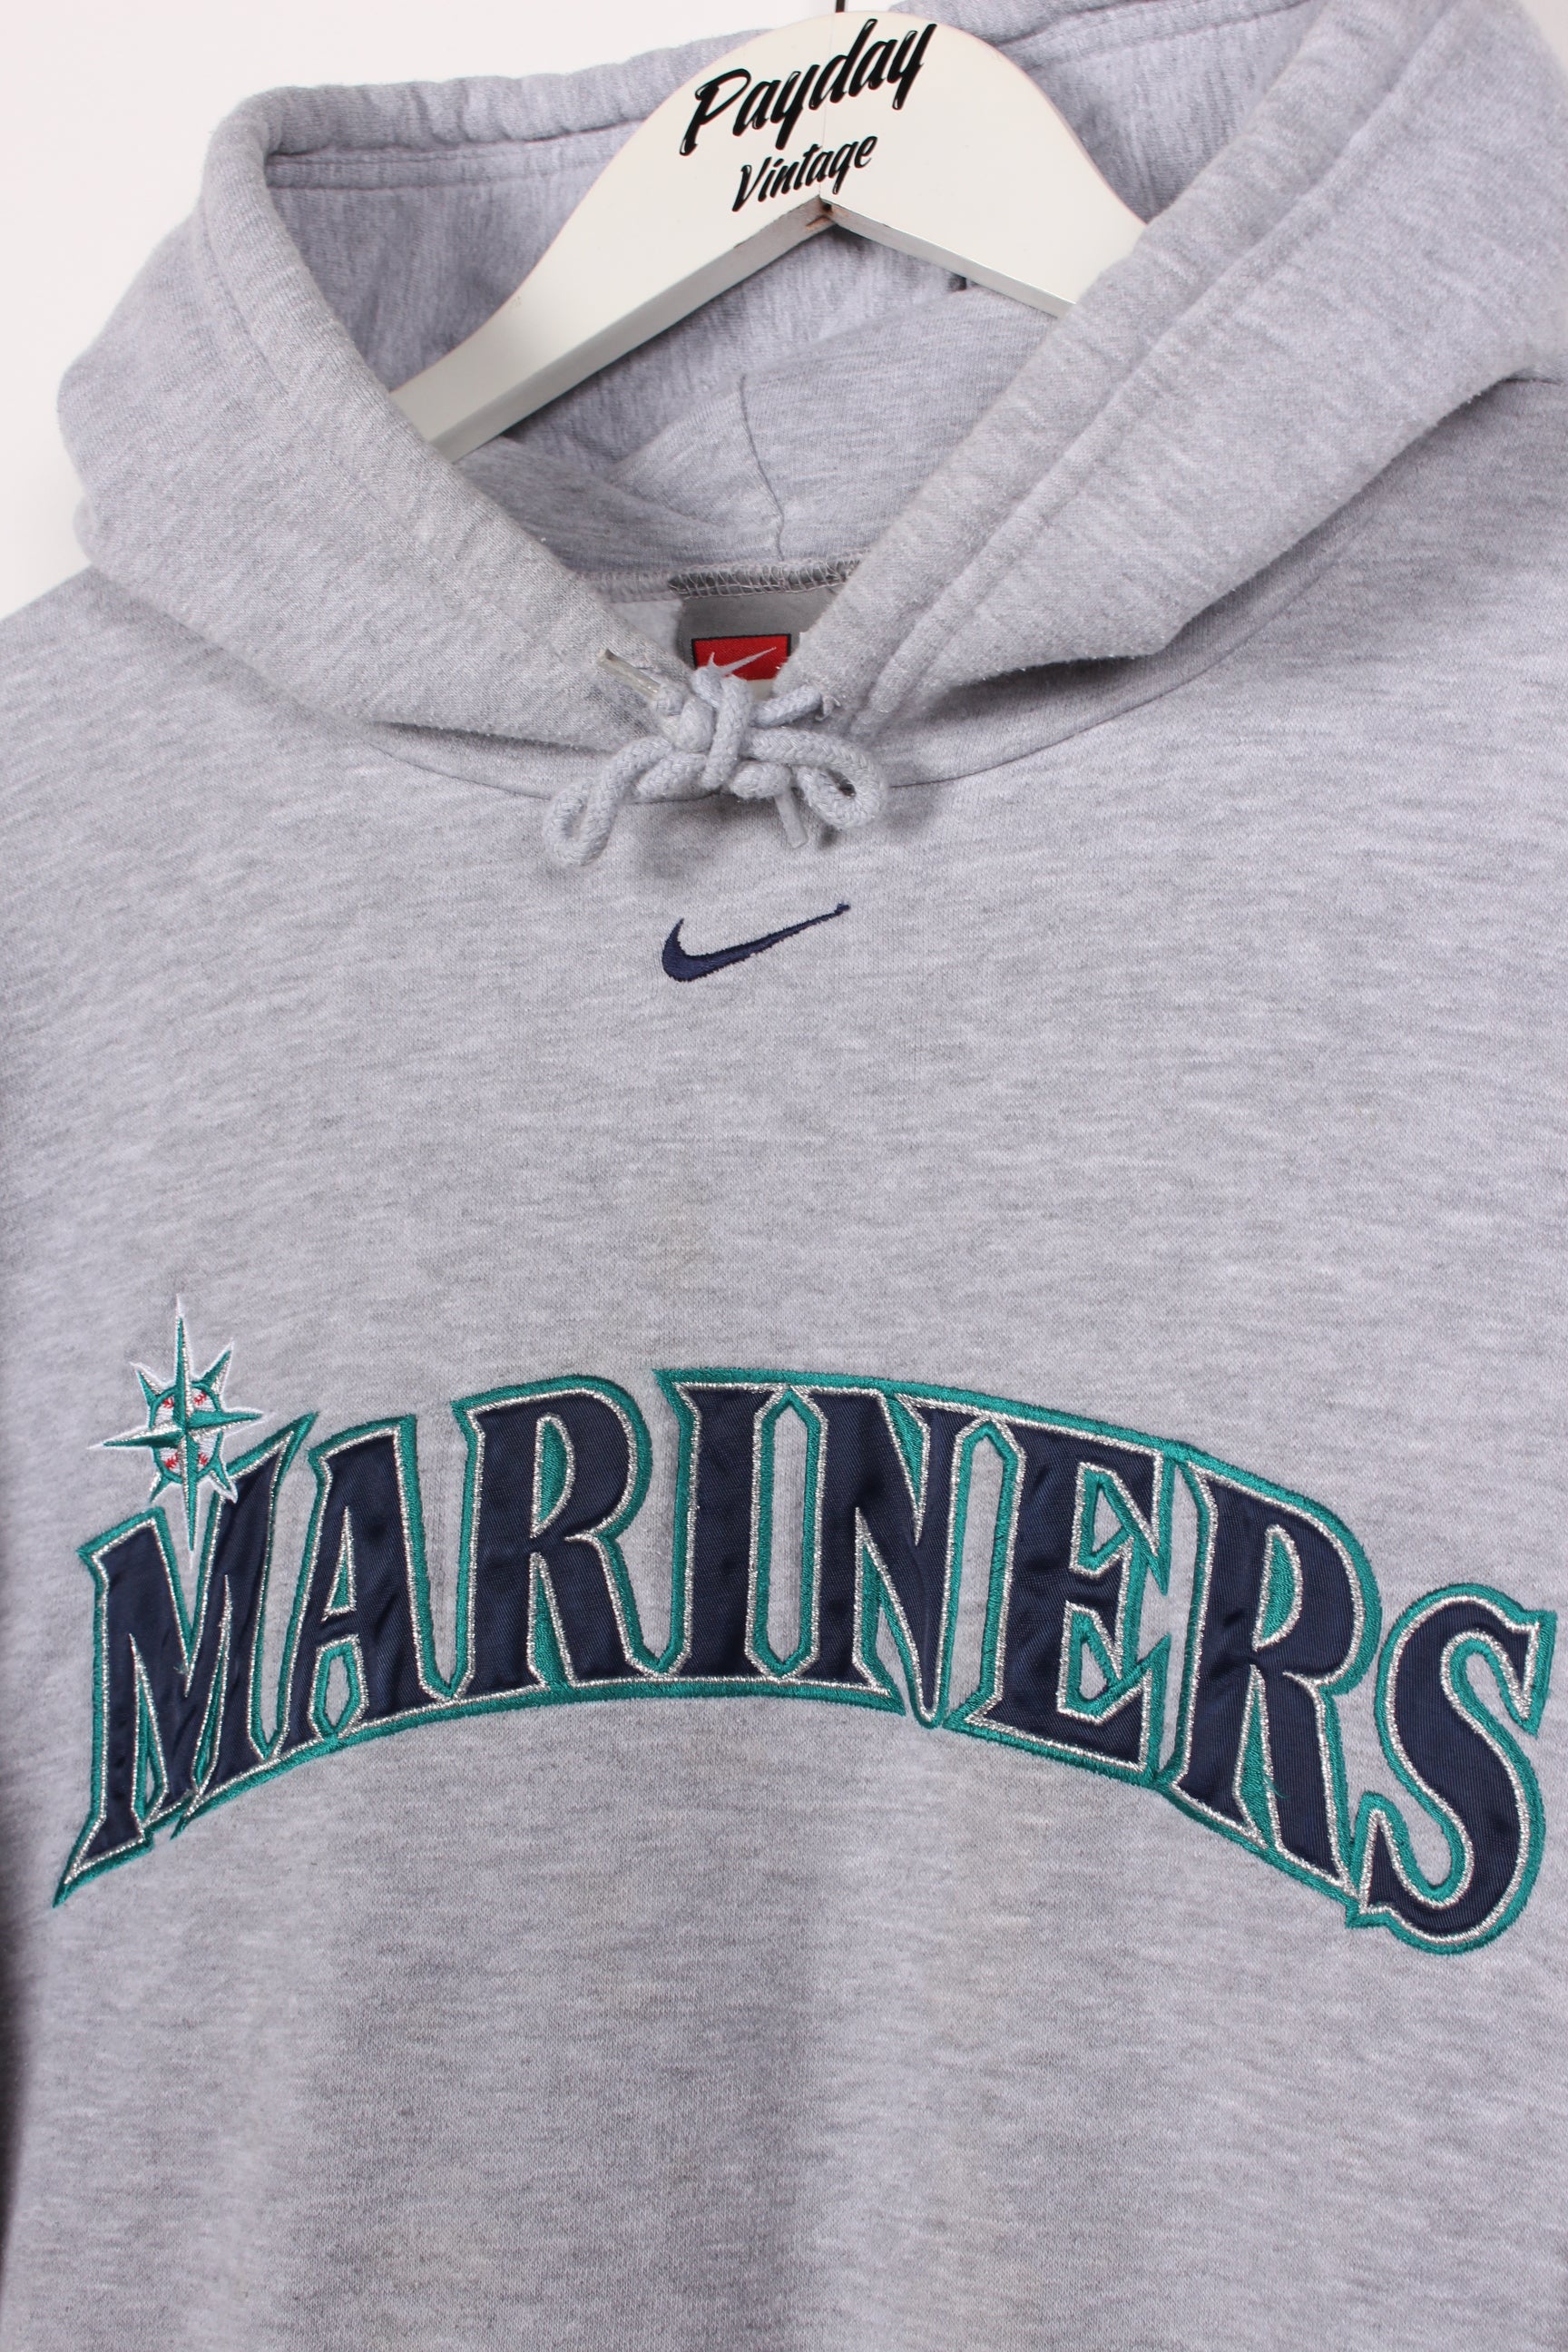 90s Seattle mariners vintage MLB hoodie. Navy and gray. Large